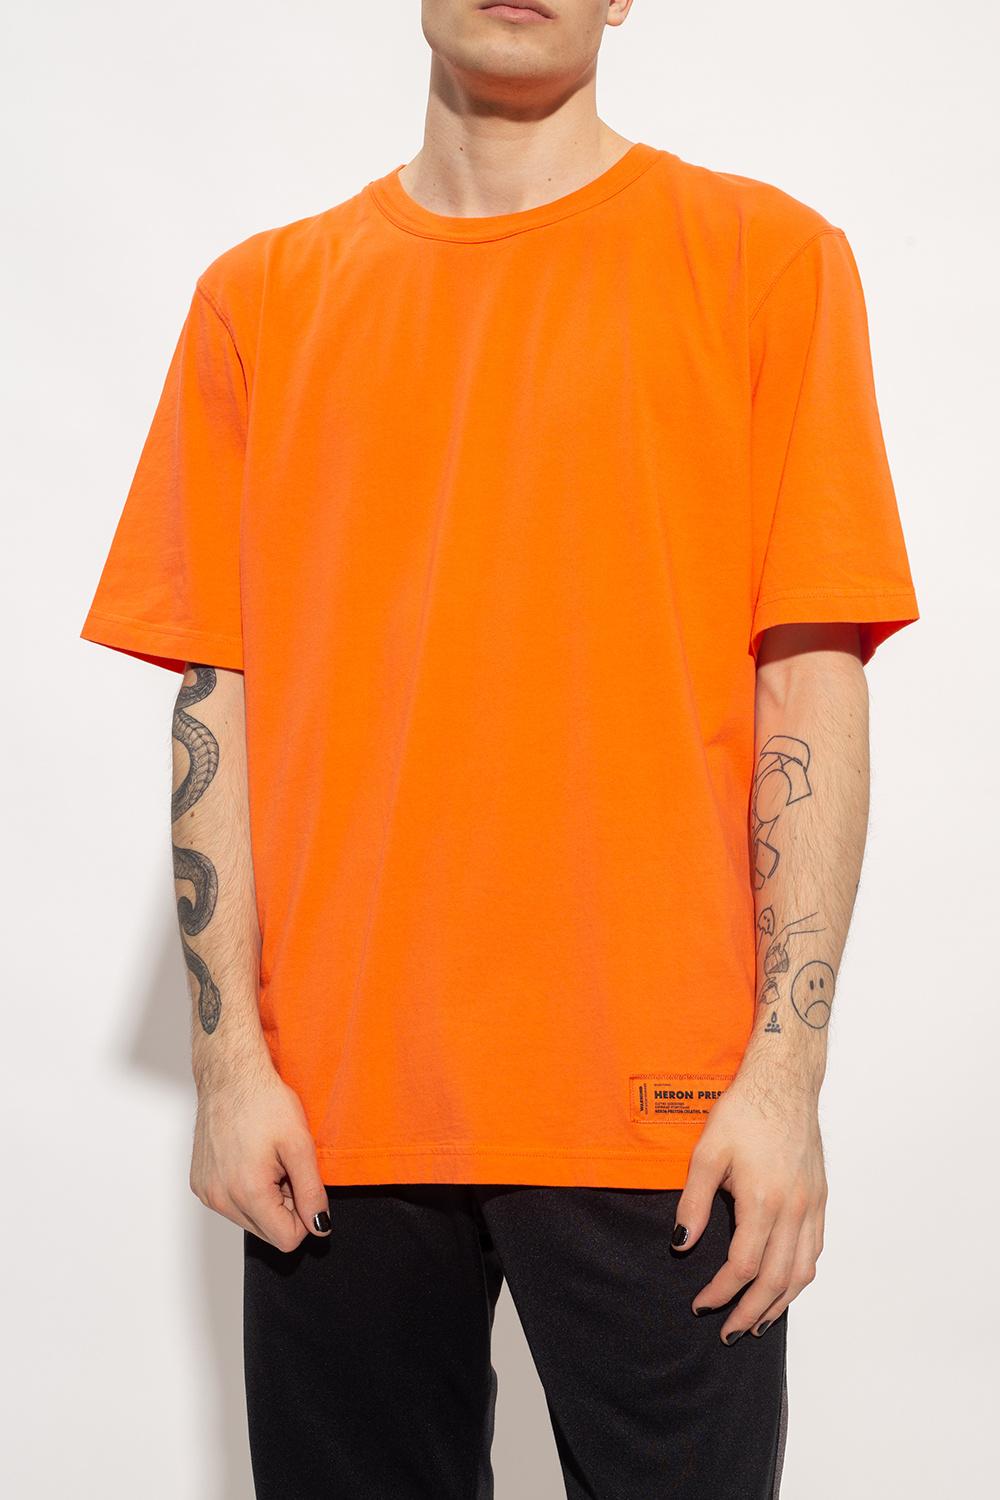 Heron Preston Cotton T-shirt in Orange for Men Mens Clothing T-shirts Short sleeve t-shirts 